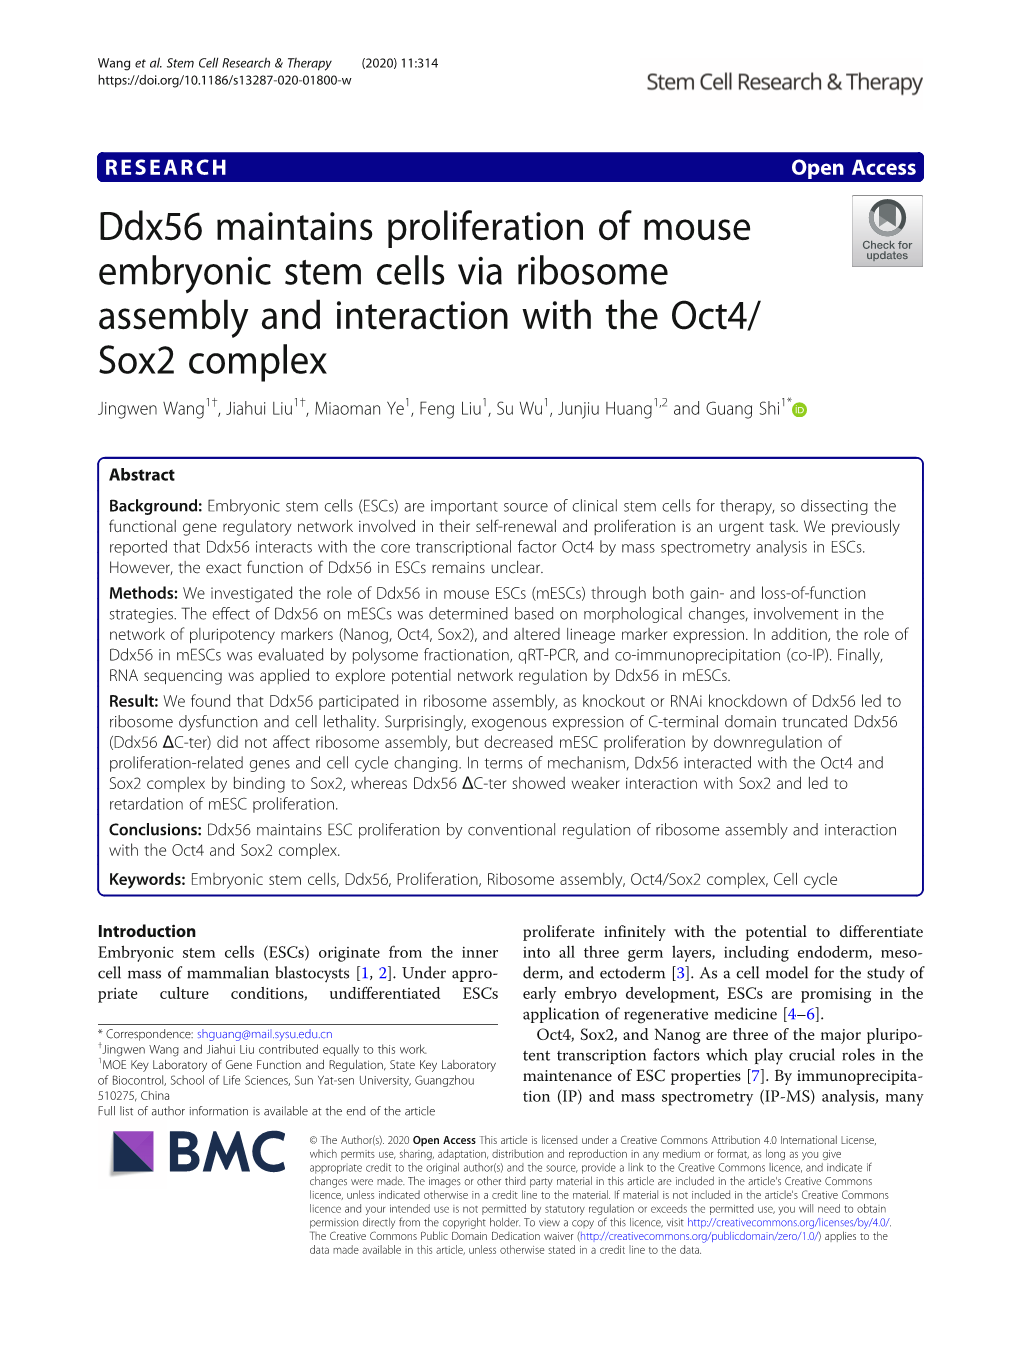 Ddx56 Maintains Proliferation of Mouse Embryonic Stem Cells Via